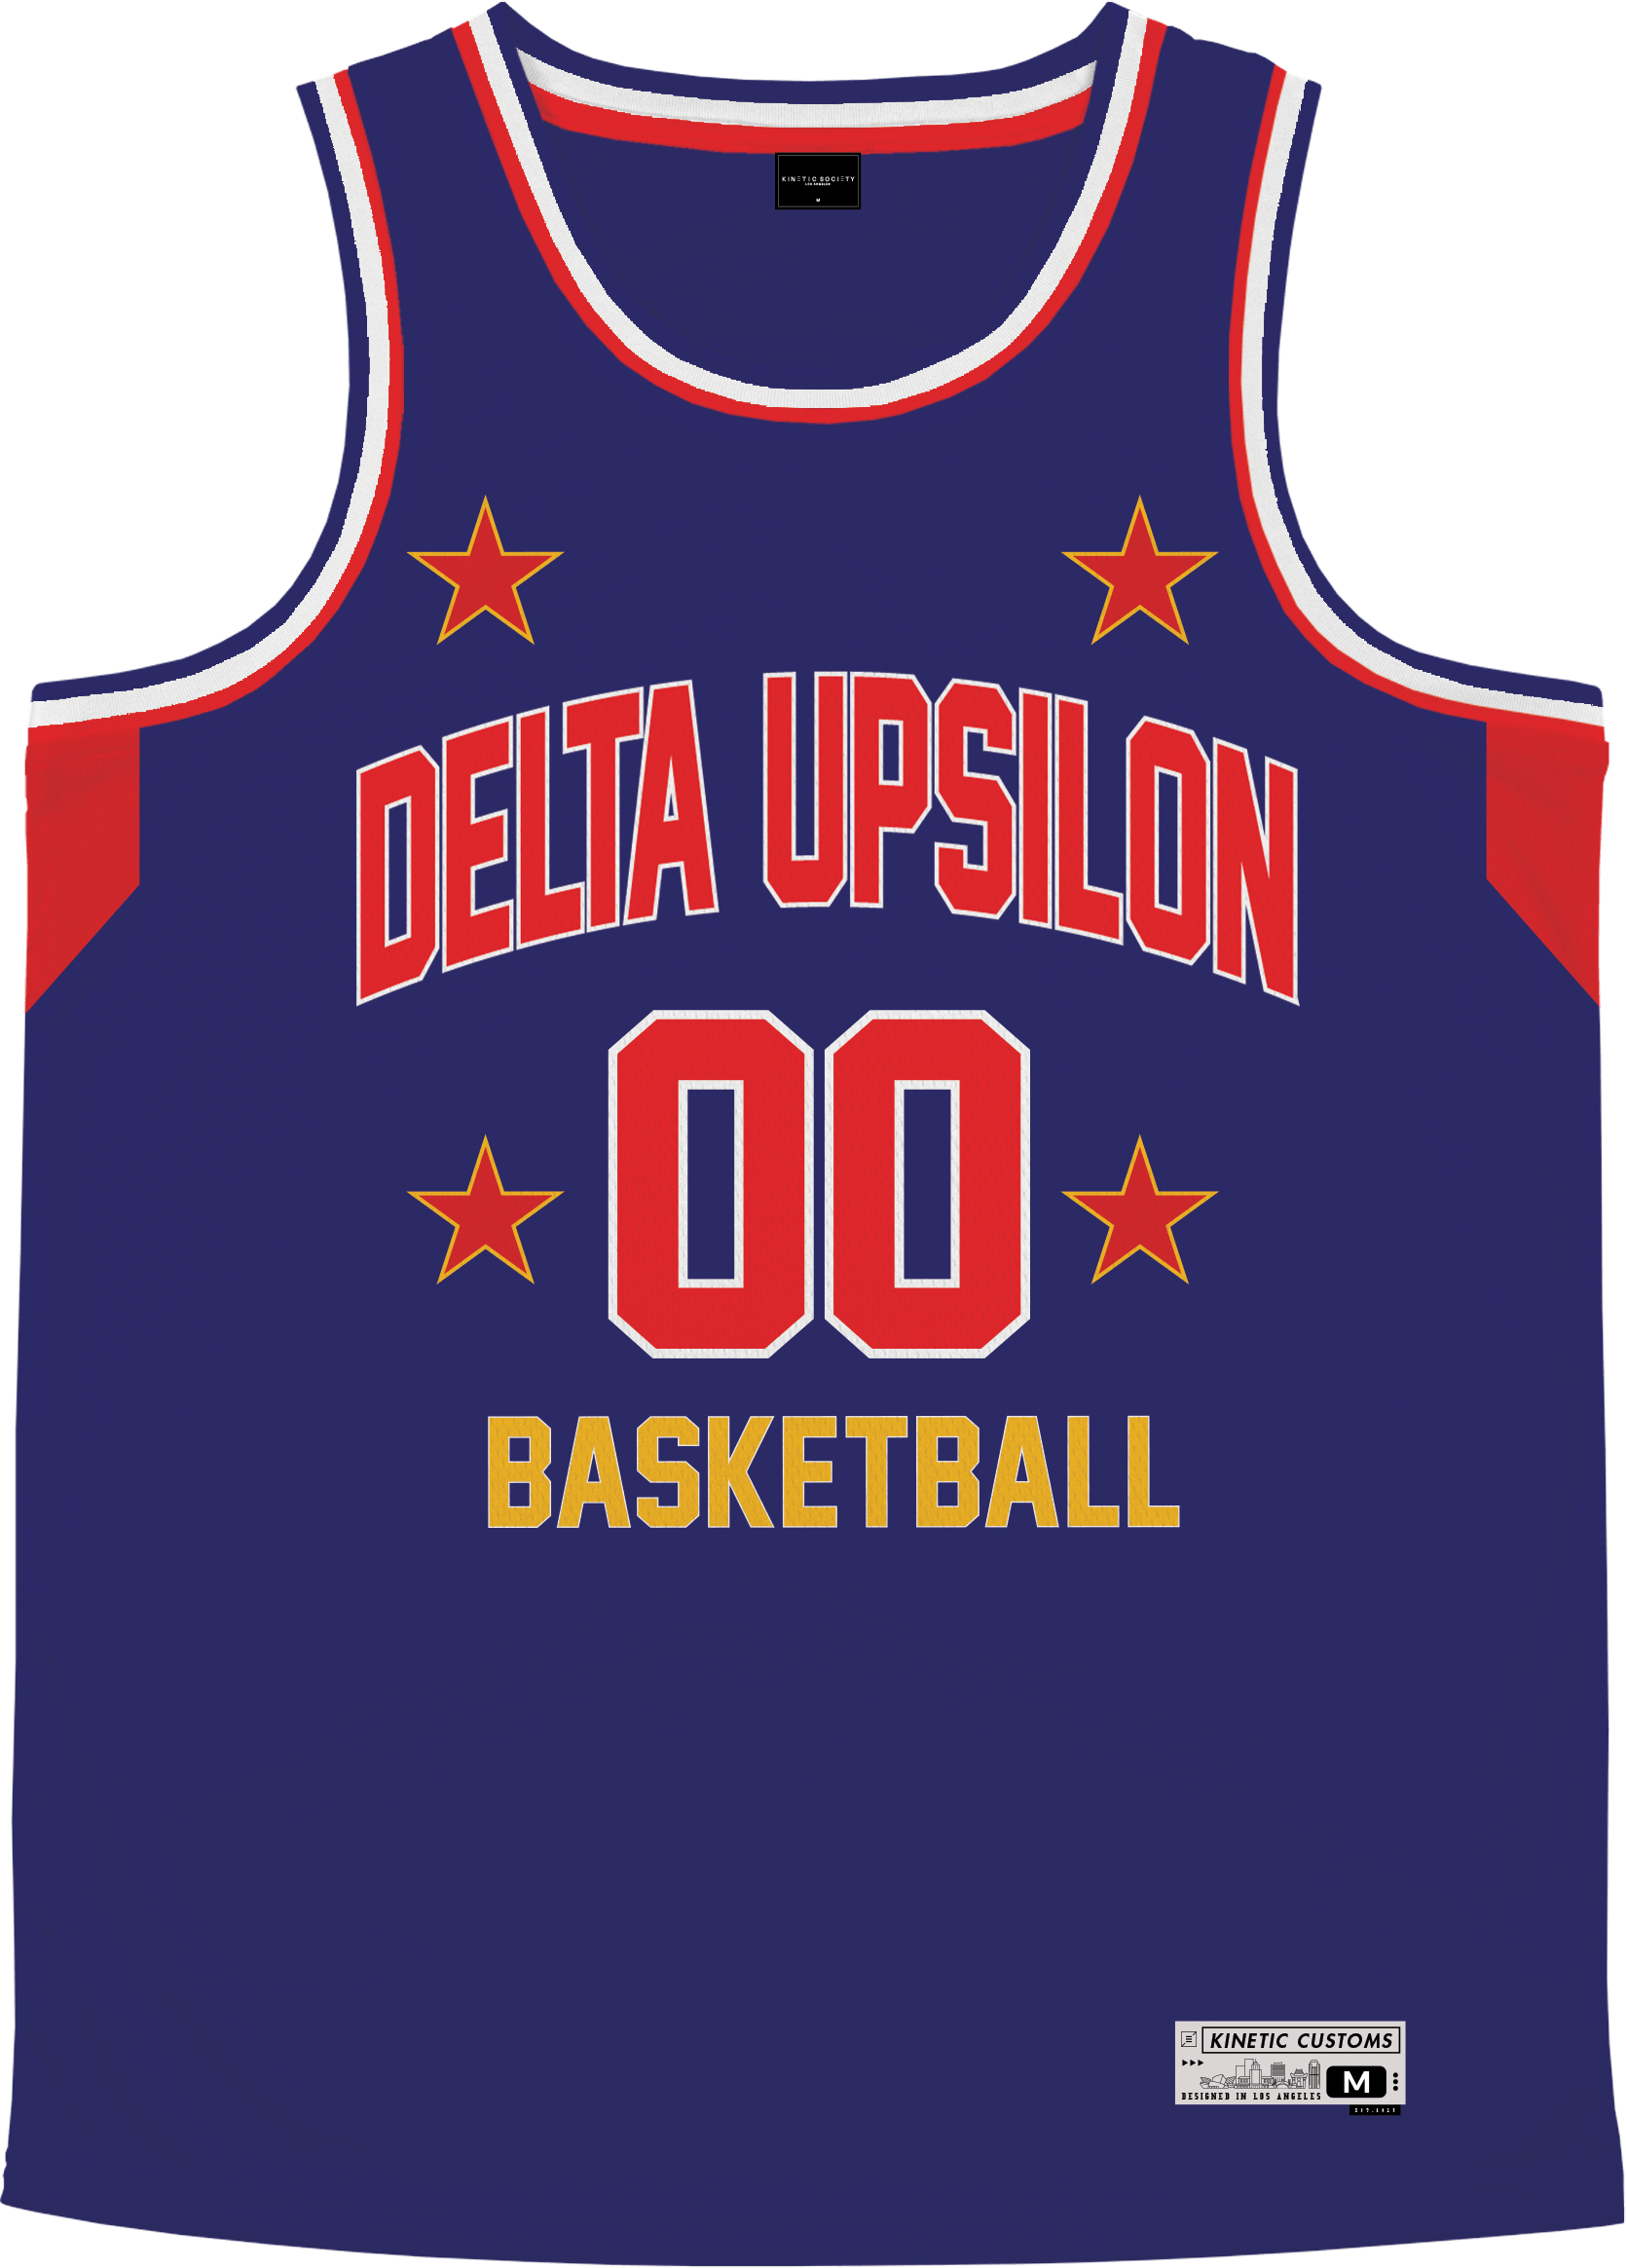 Delta Upsilon - Retro Ballers Basketball Jersey - Kinetic Society